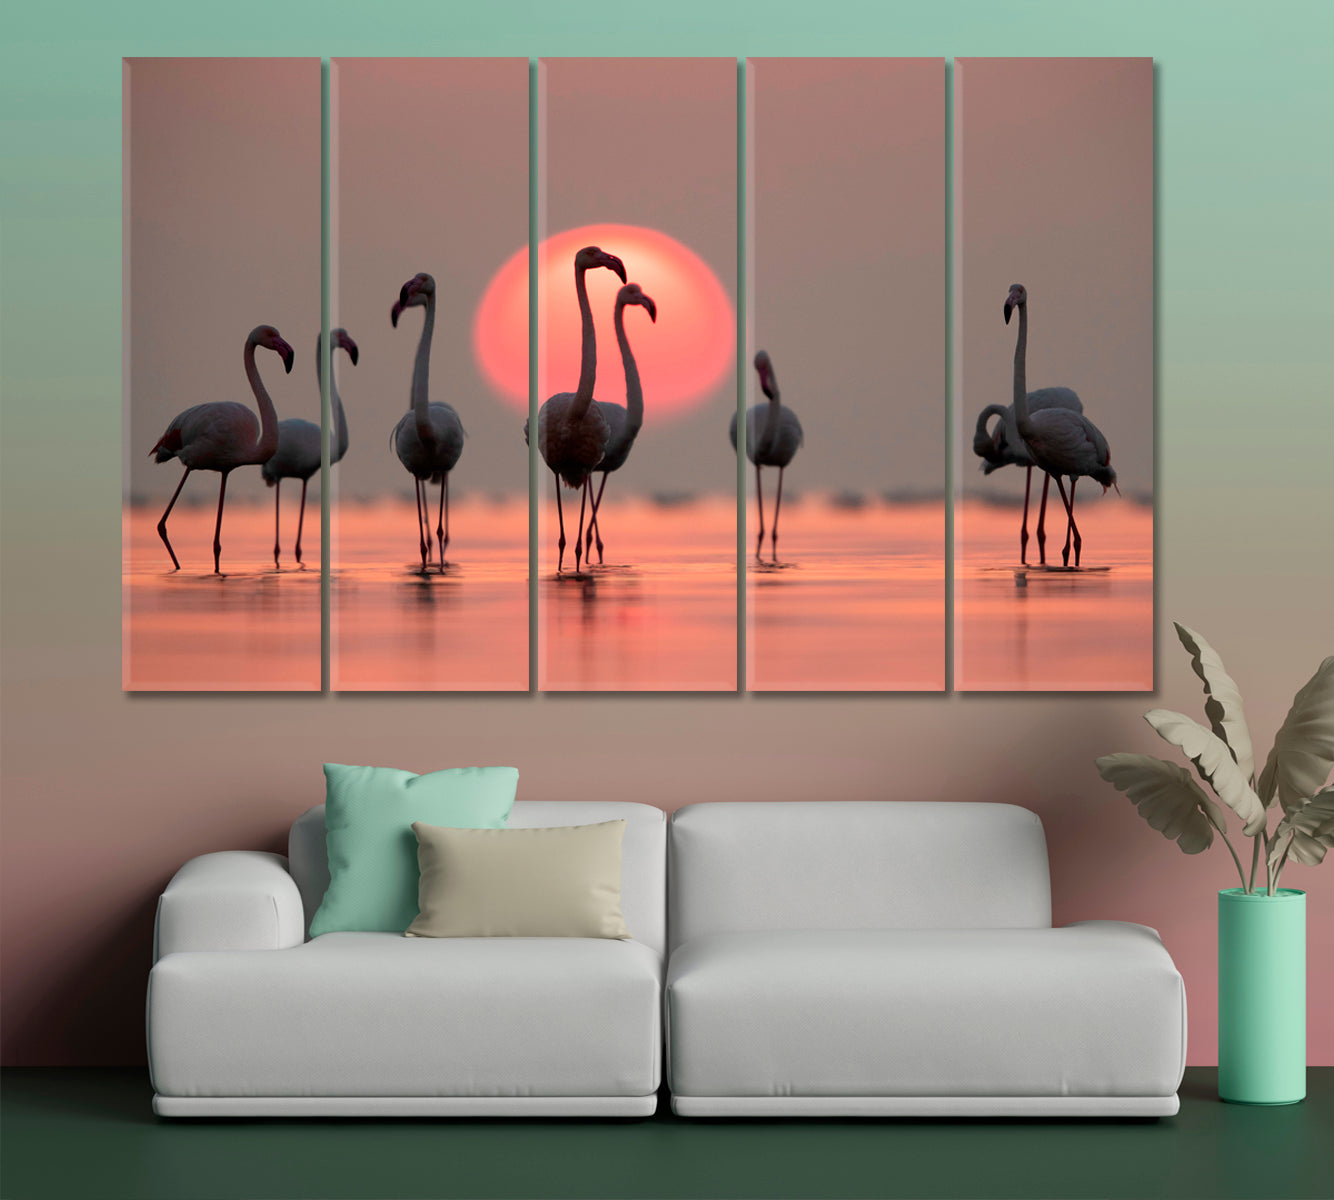 Asker Coast Greater Flamingos Amazing Coral Hue Sunset Dramatic Sky Wild Life Framed Art Artesty 5 panels 36" x 24" 